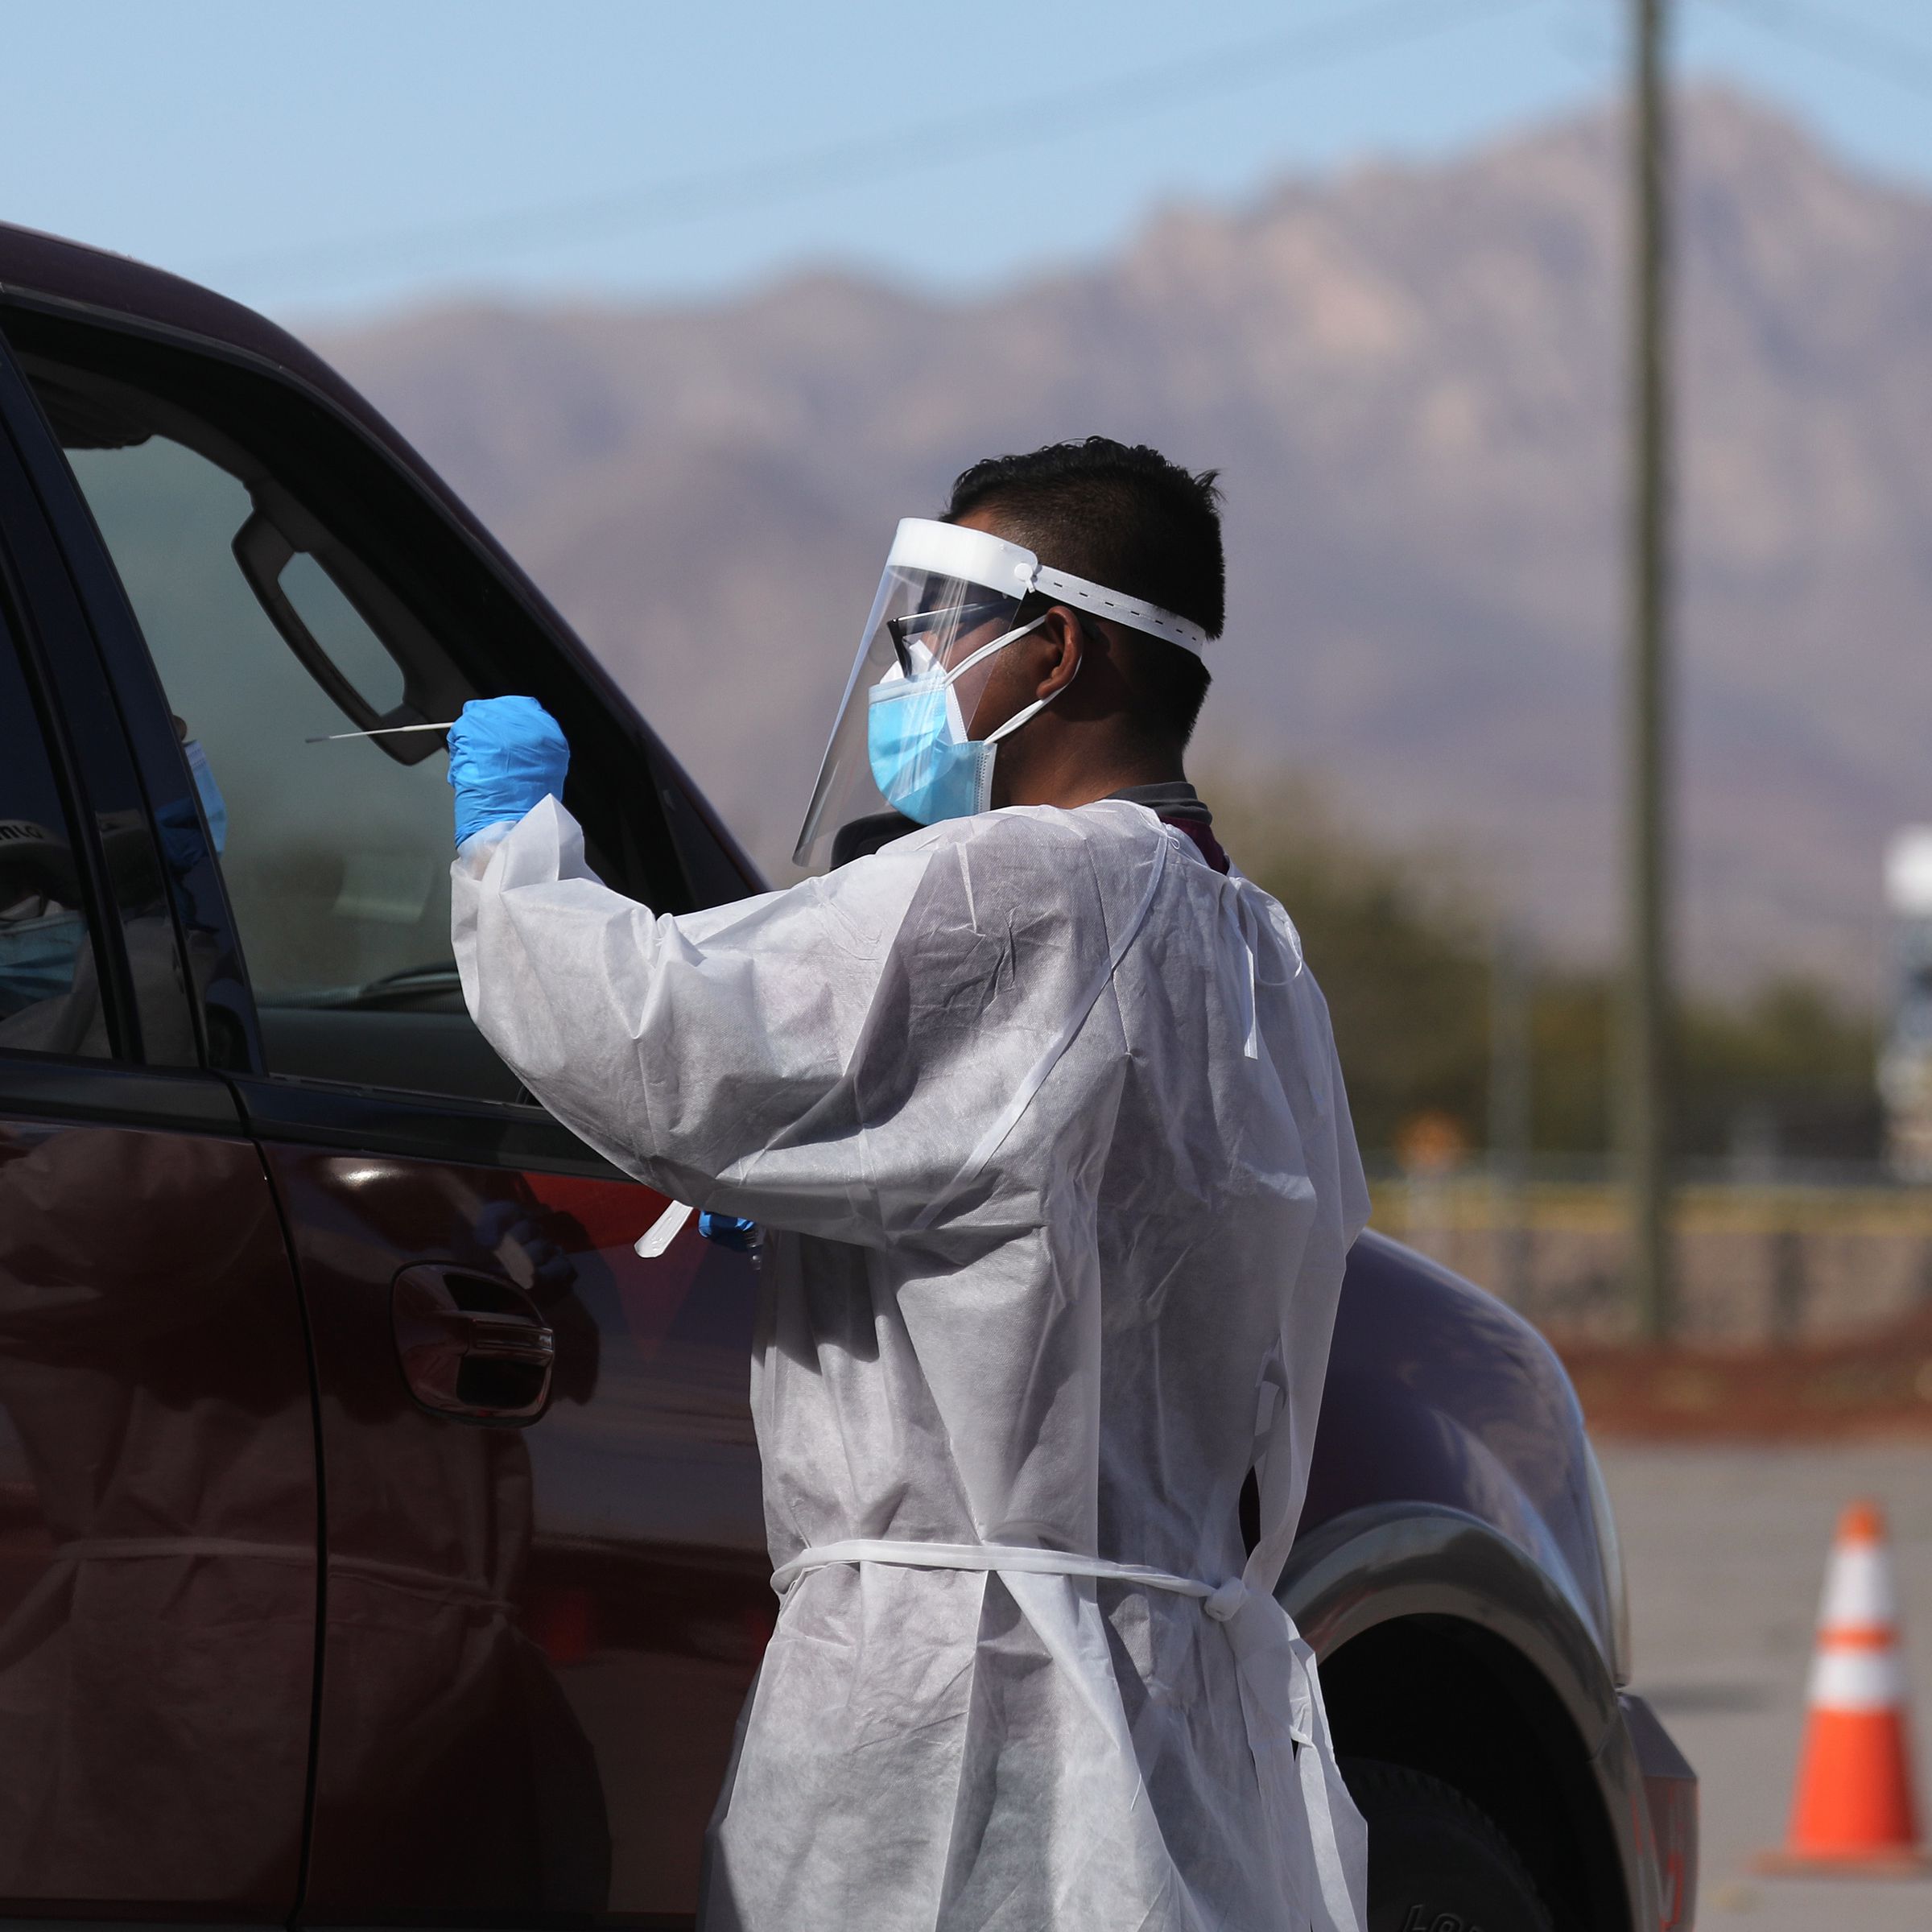 El Paso Striken With Serious Surge Of Coronavirus Cases